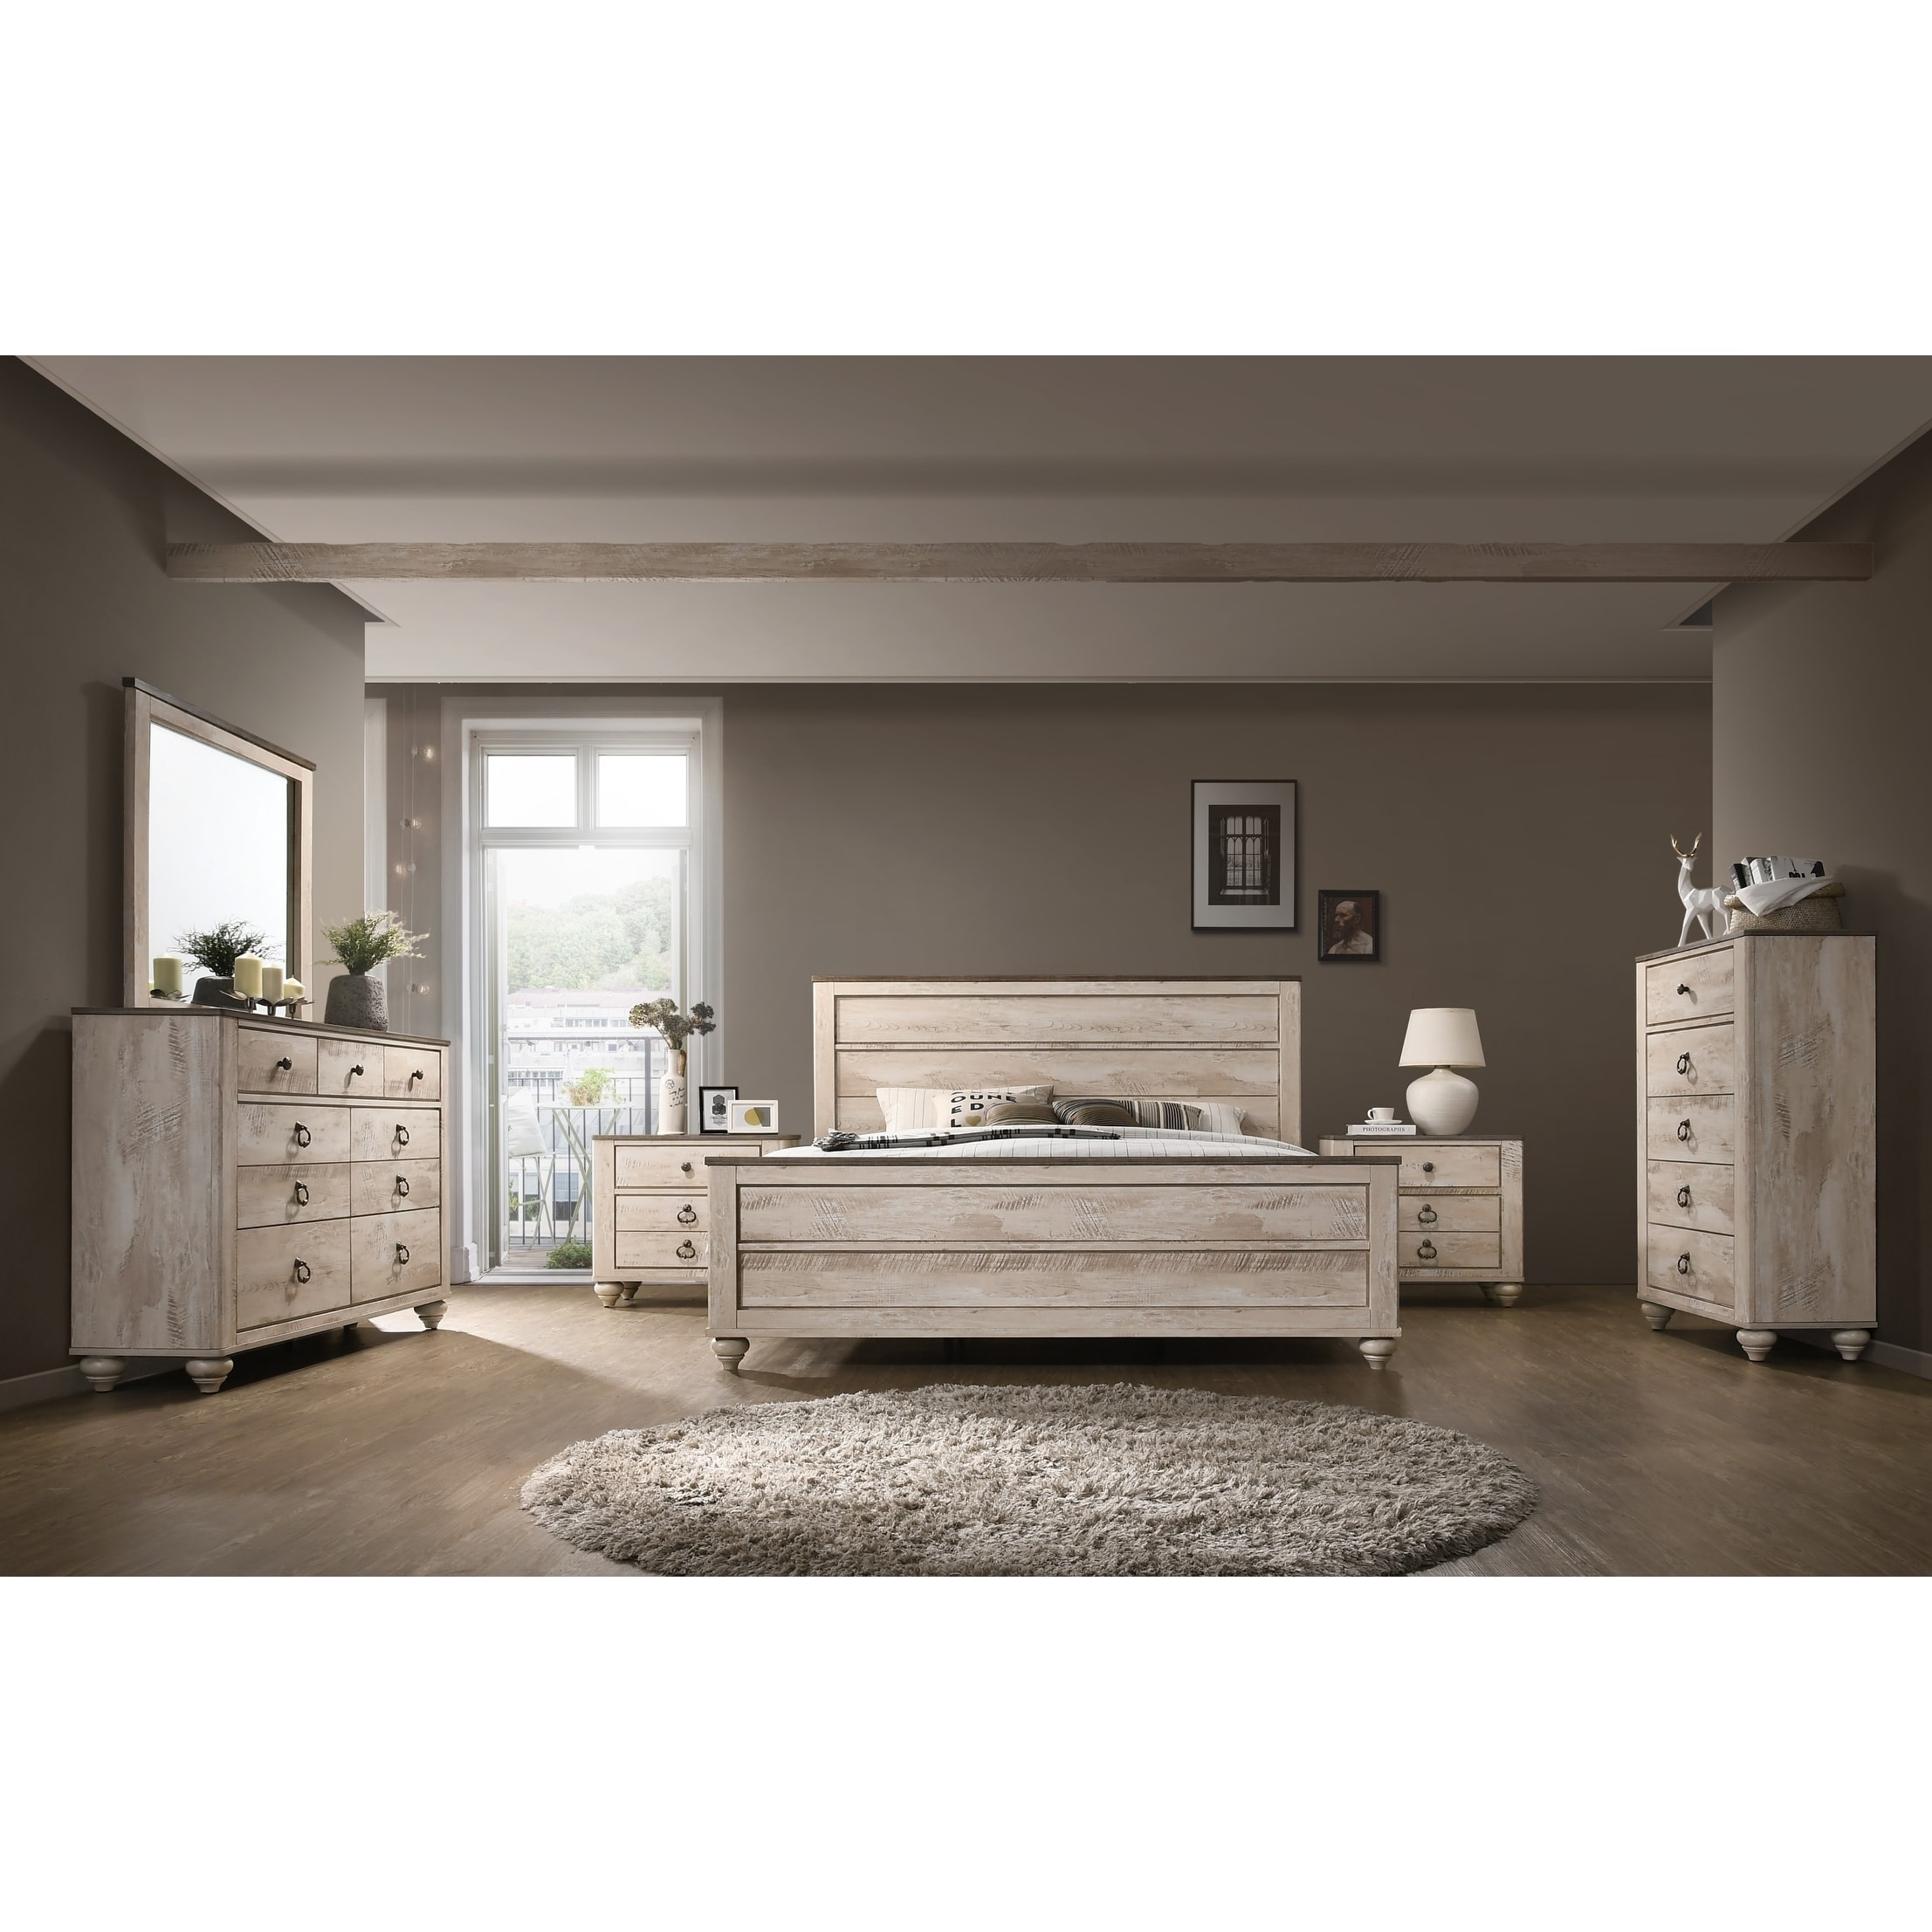 Imerland Contemporary White Wash Finish 6-Piece KING Bedroom Set